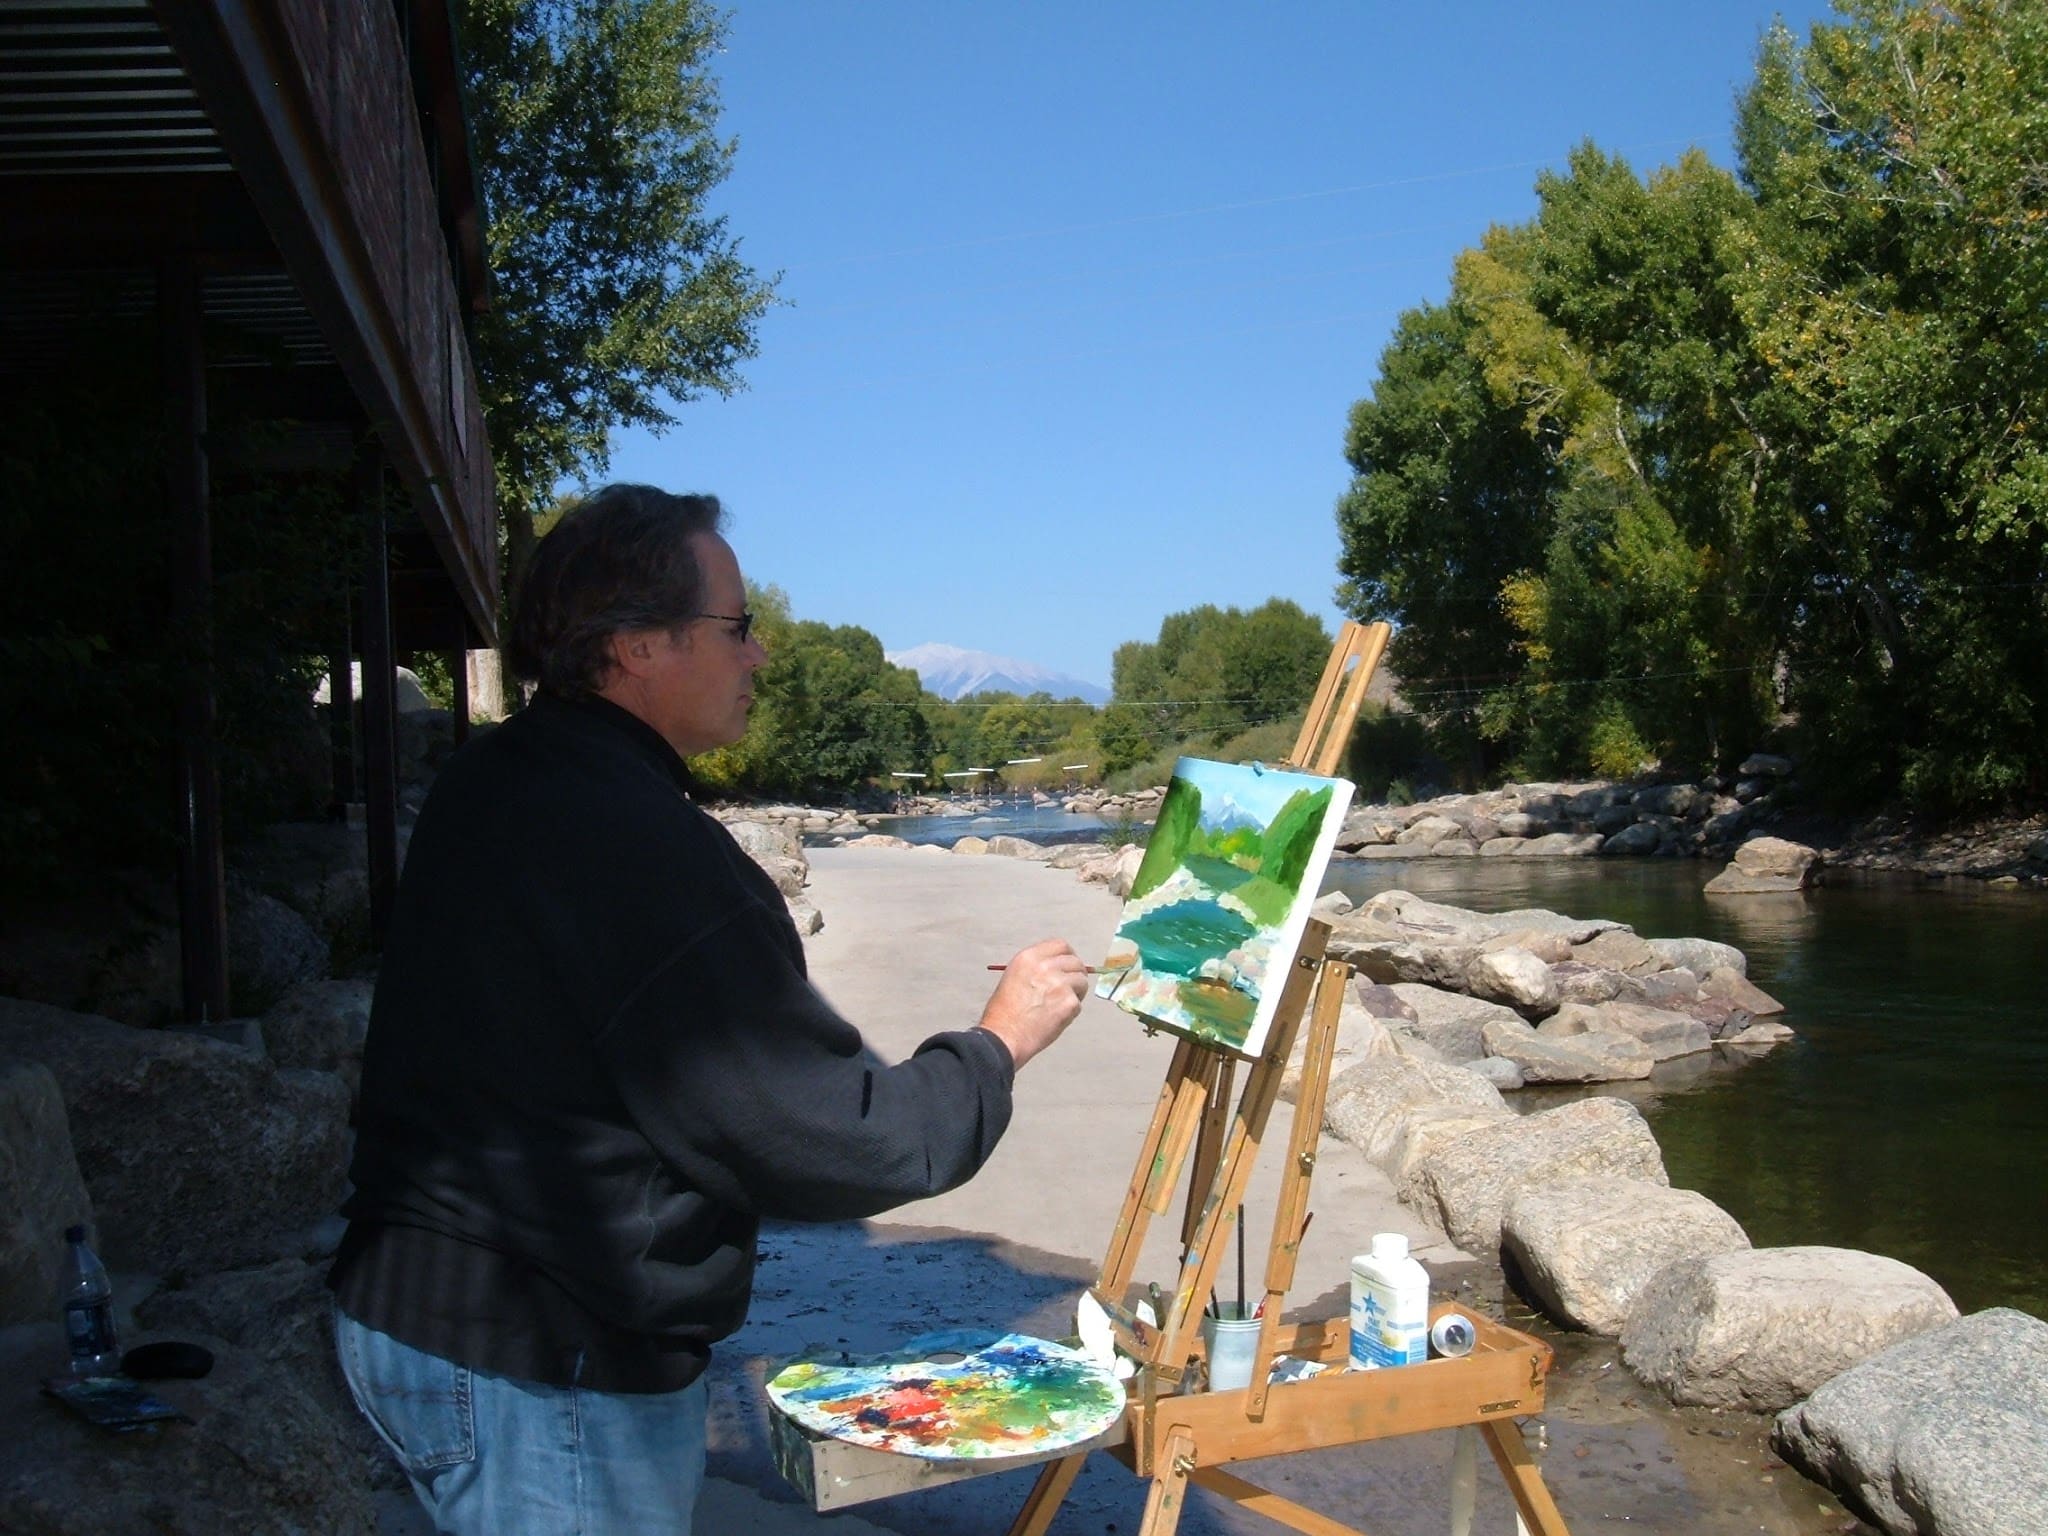 An artist paint outside along the river bank.